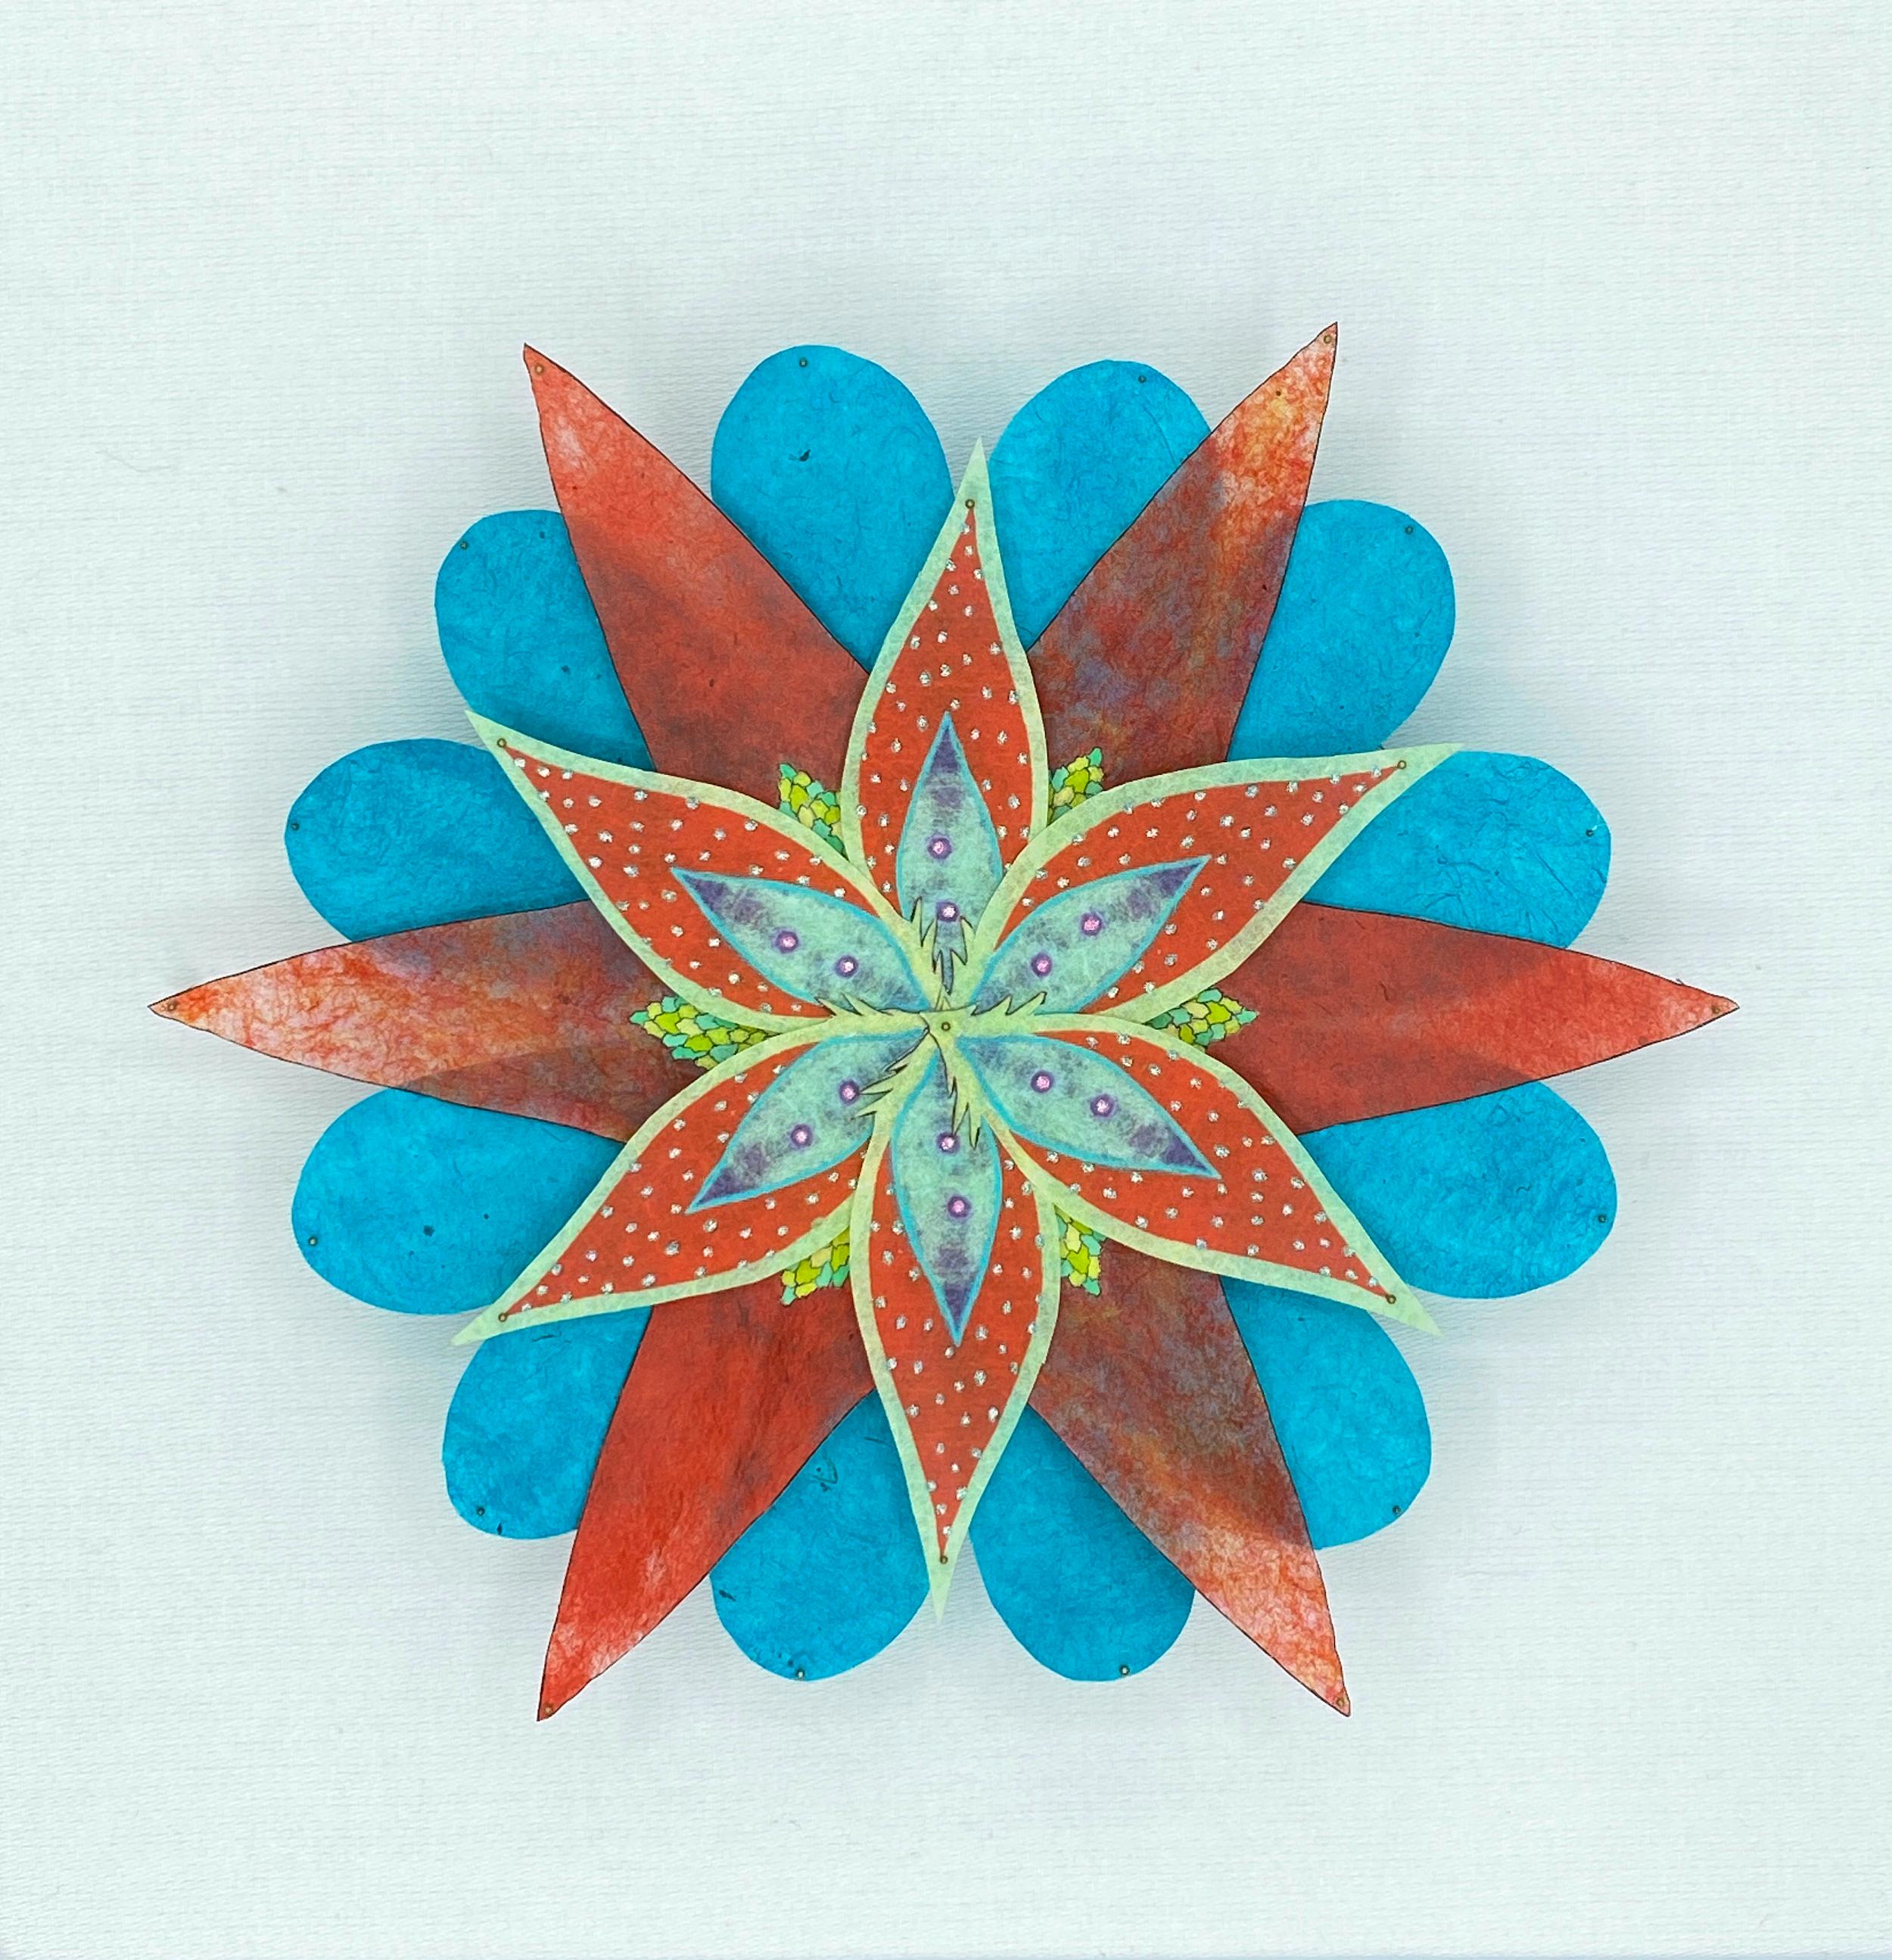 Jill Parisi Abstract Sculpture - Fanfare Star, Teal Blue, Red Colorful Botanical Paper Flower Wall Sculpture